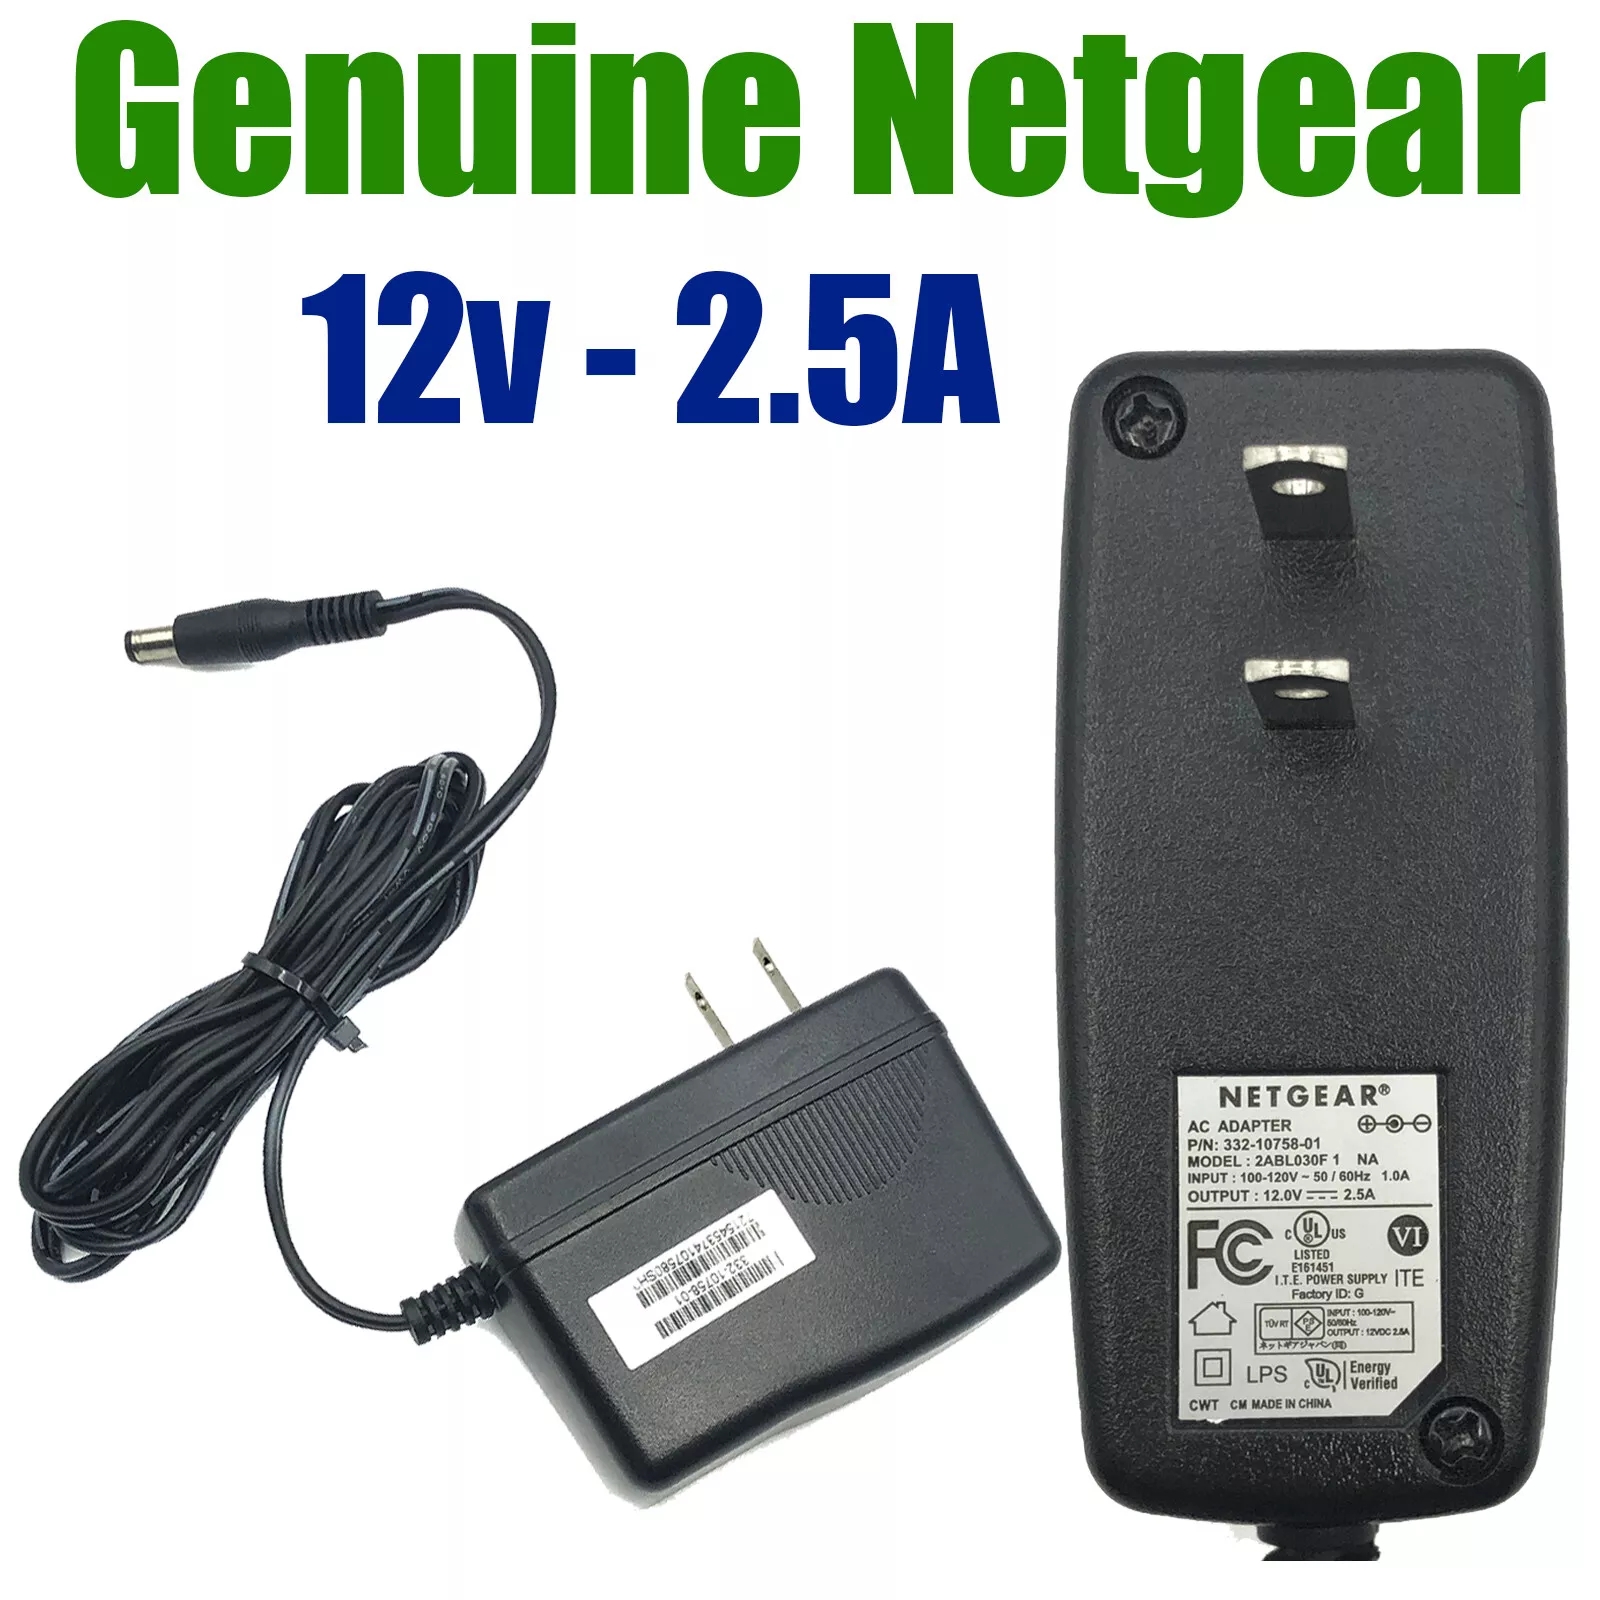 *Brand NEW*Genuine Netgear 12v 2.5A 30W AC Power Adapter for Orbi WiFi AX4200 Tri-Band RBS750 RBR750 Power Sup - Click Image to Close